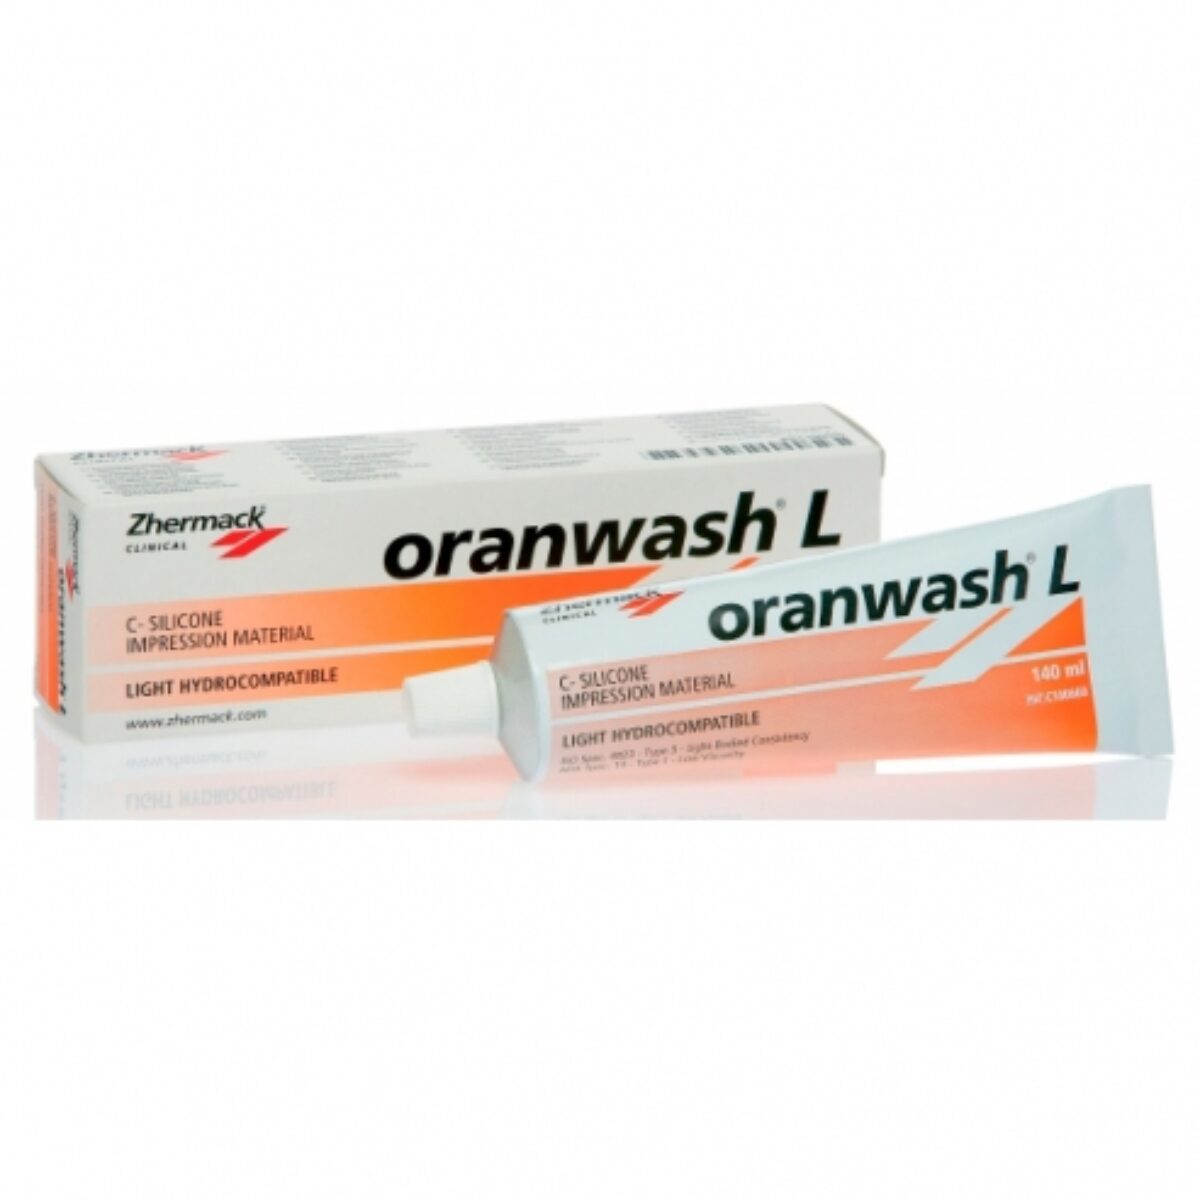 ORANWASH L